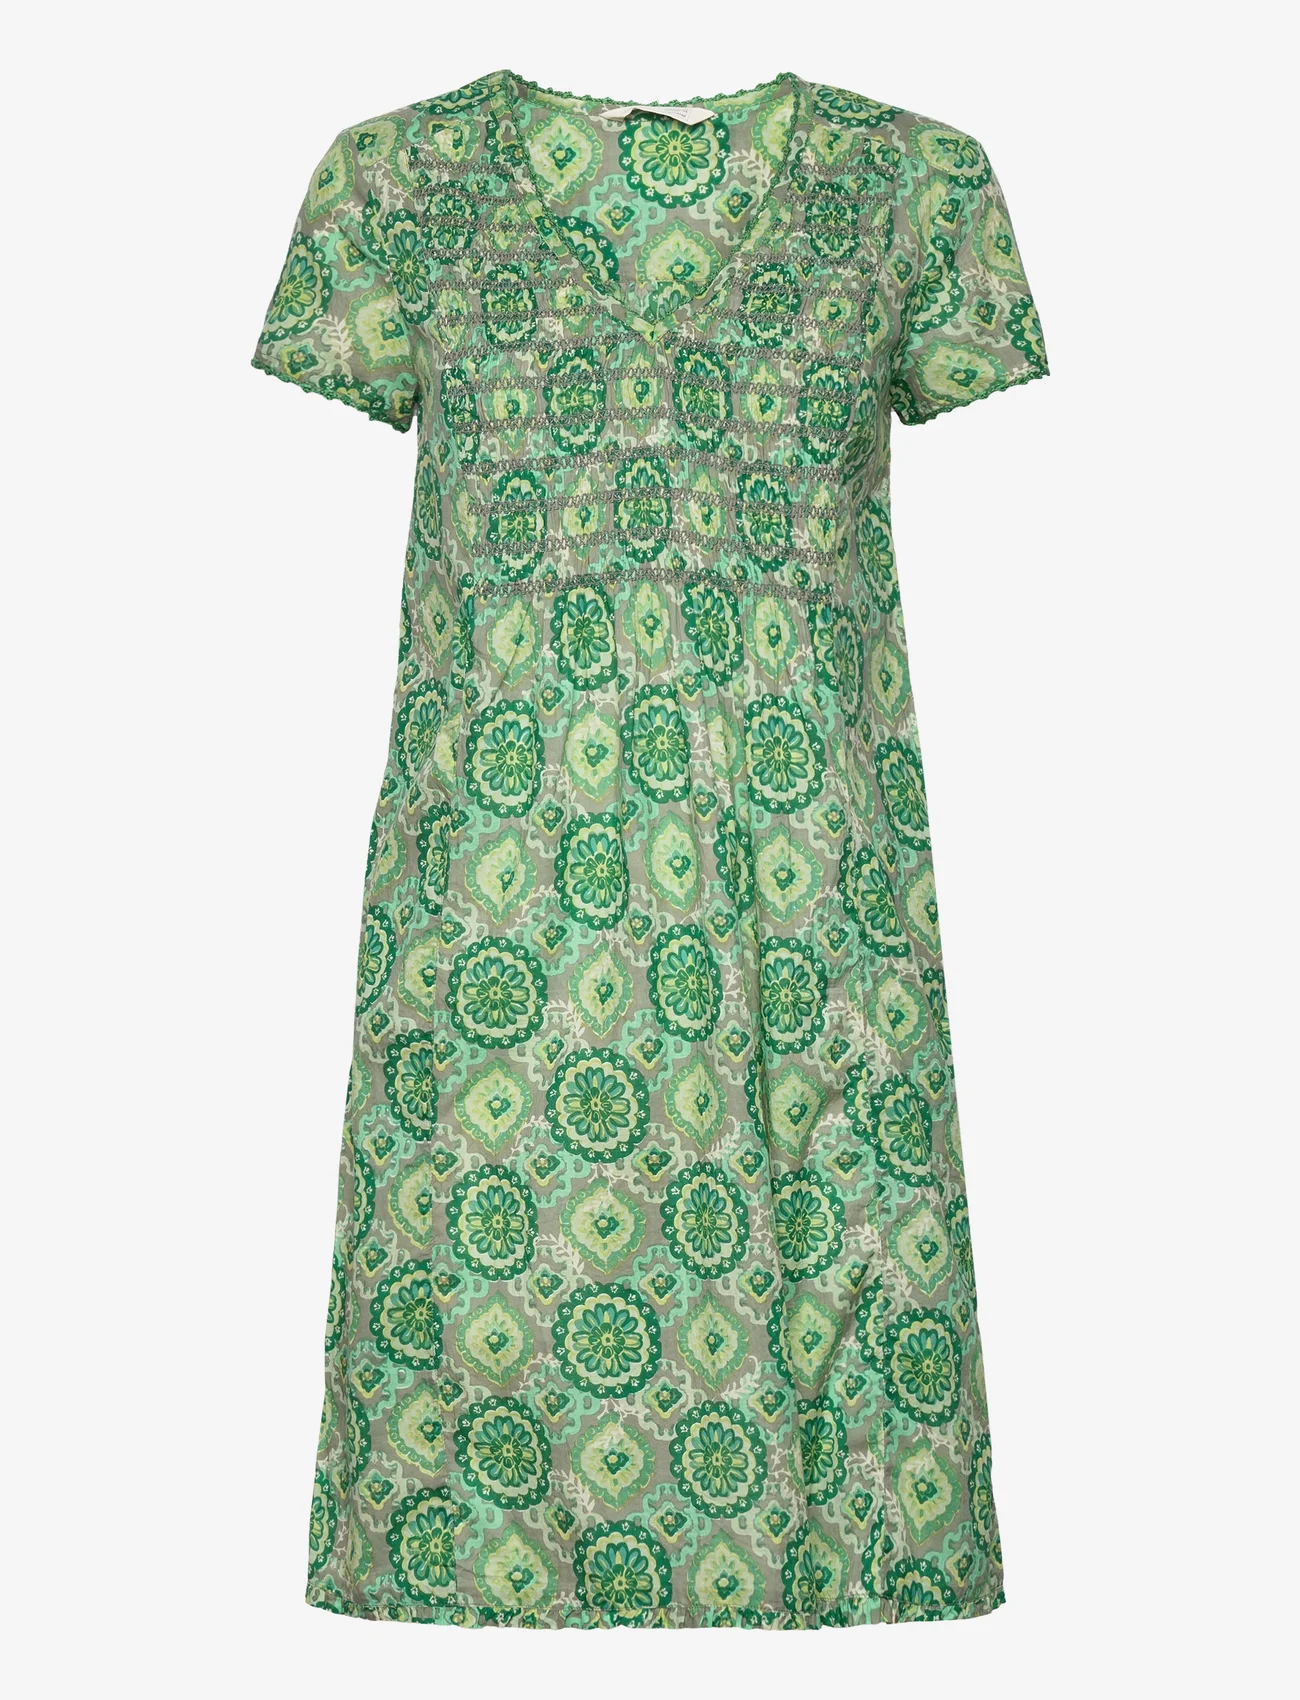 ODD MOLLY - Scarlet Short Dress - t-shirt dresses - happy green - 0